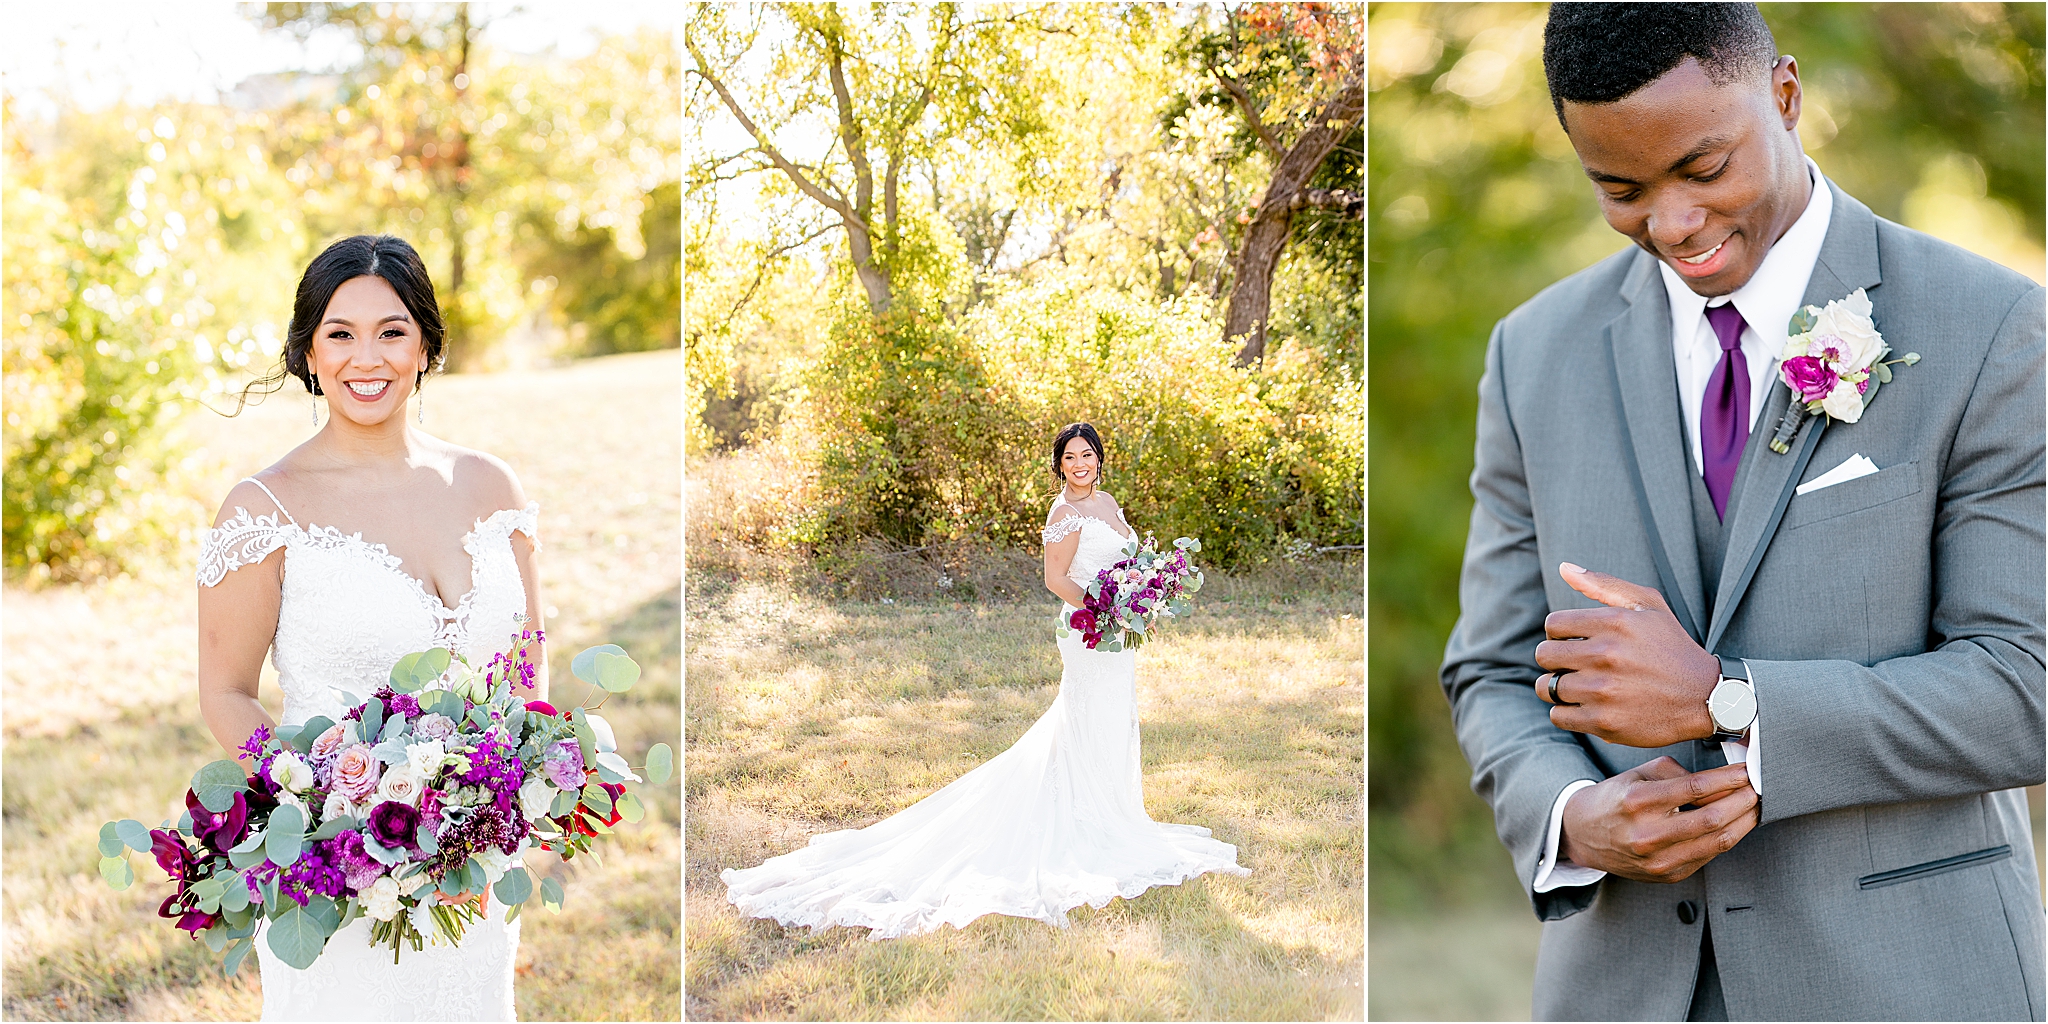 Sunset Wedding Portraits in McKinney, Texas by Premier DFW Wedding Photographer Jillian Hogan